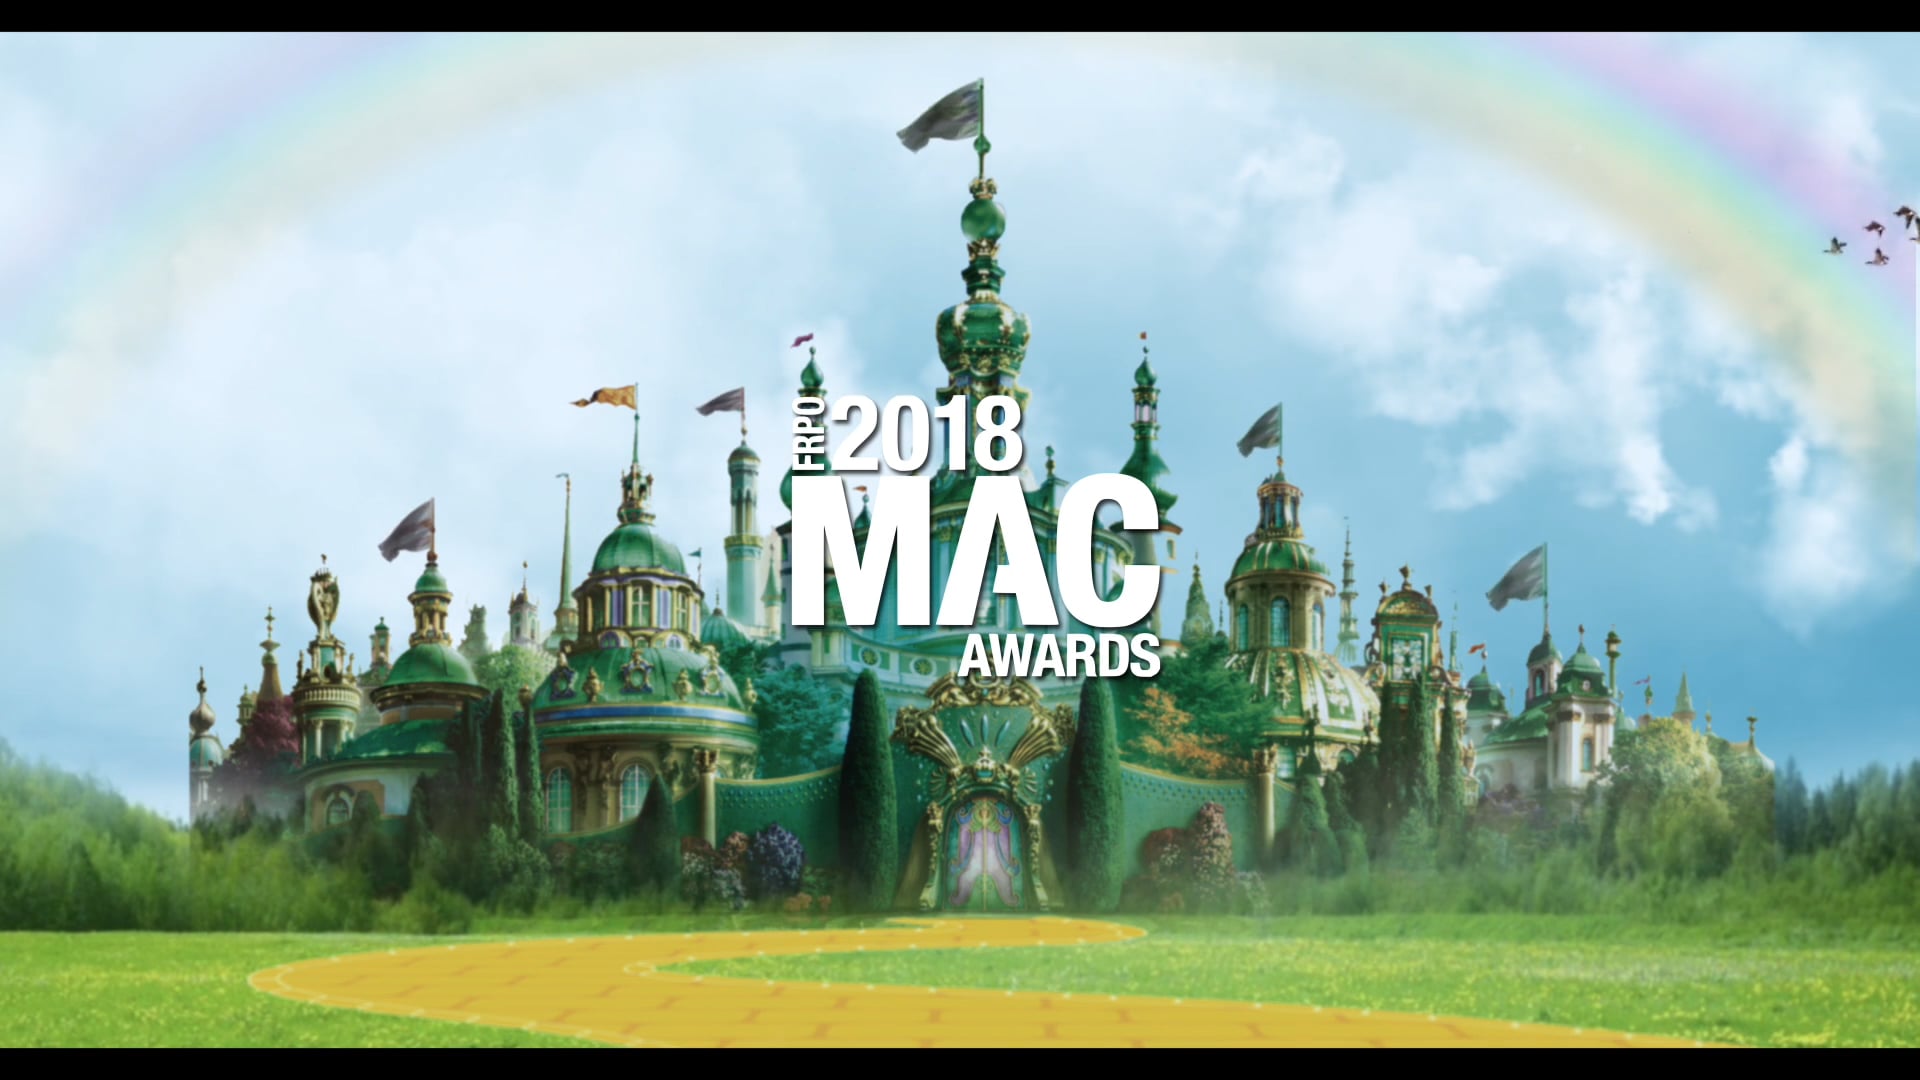 FRPO MAC AWARDS 2018